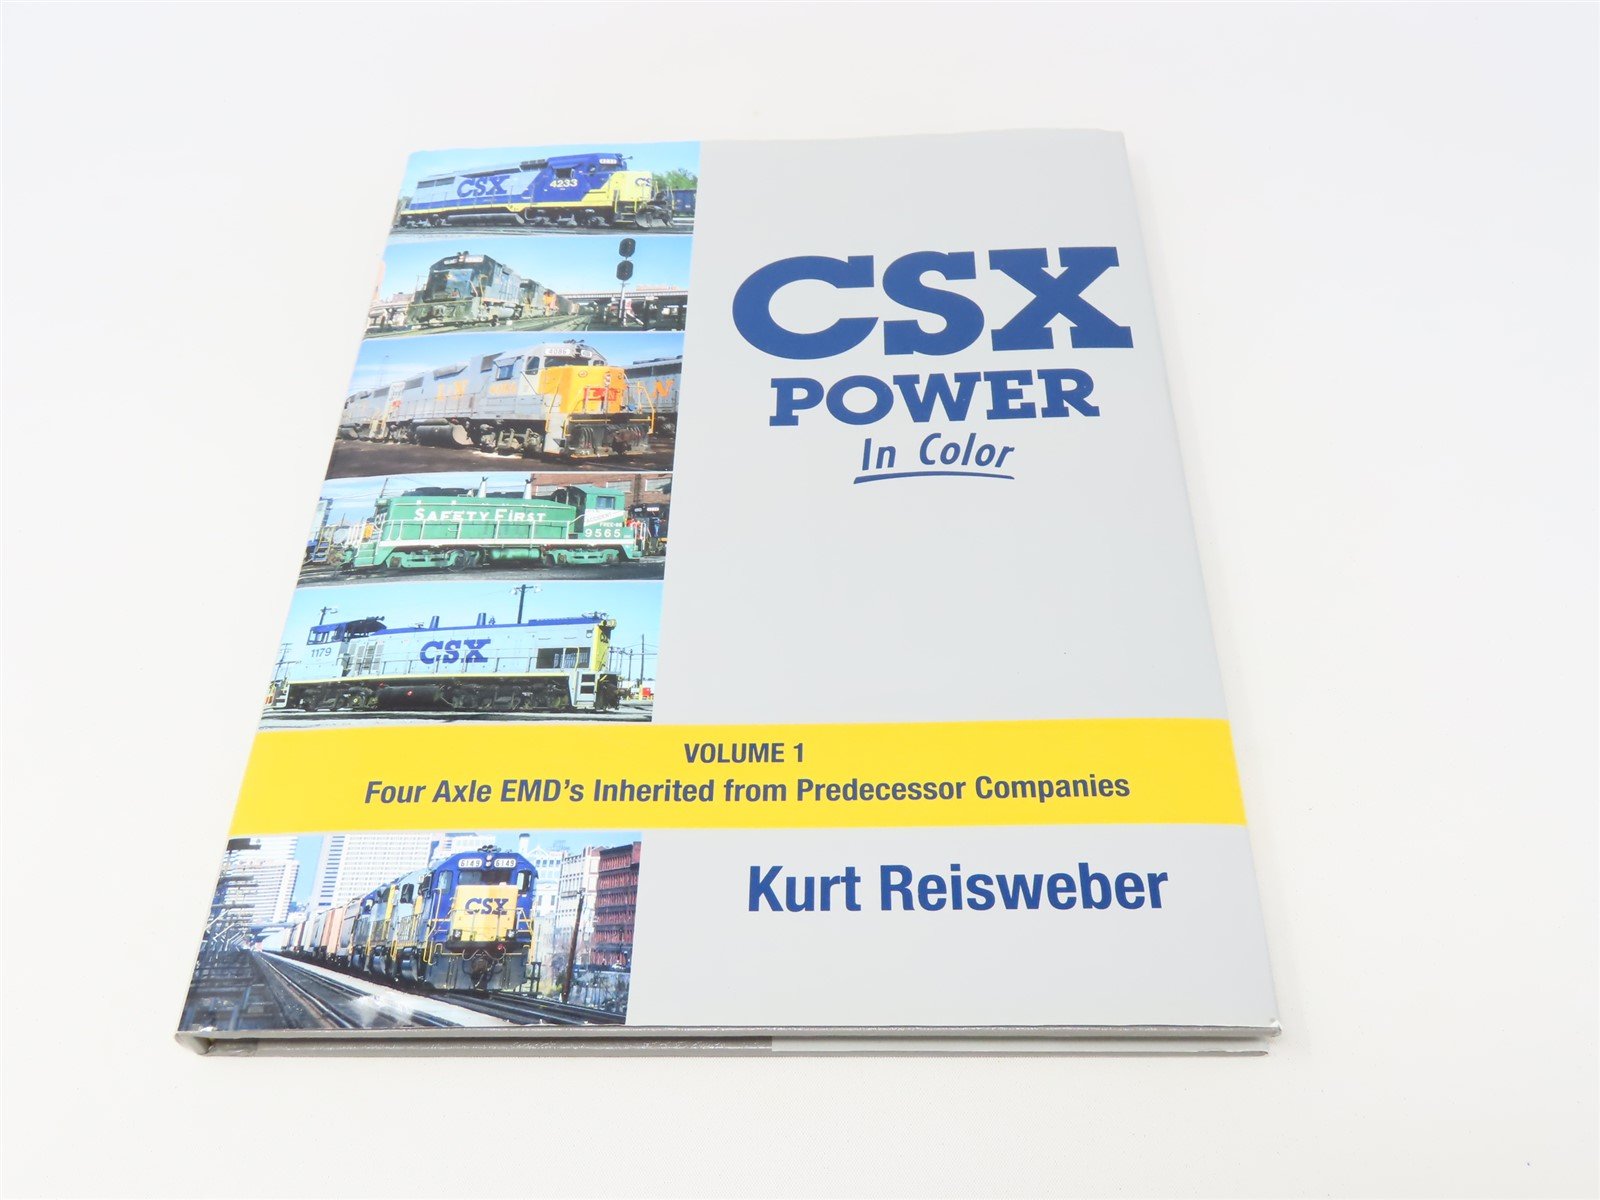 Morning Sun-CSX Power In Color Vol 1 by Kurt Reisweber ©2017 HC Book